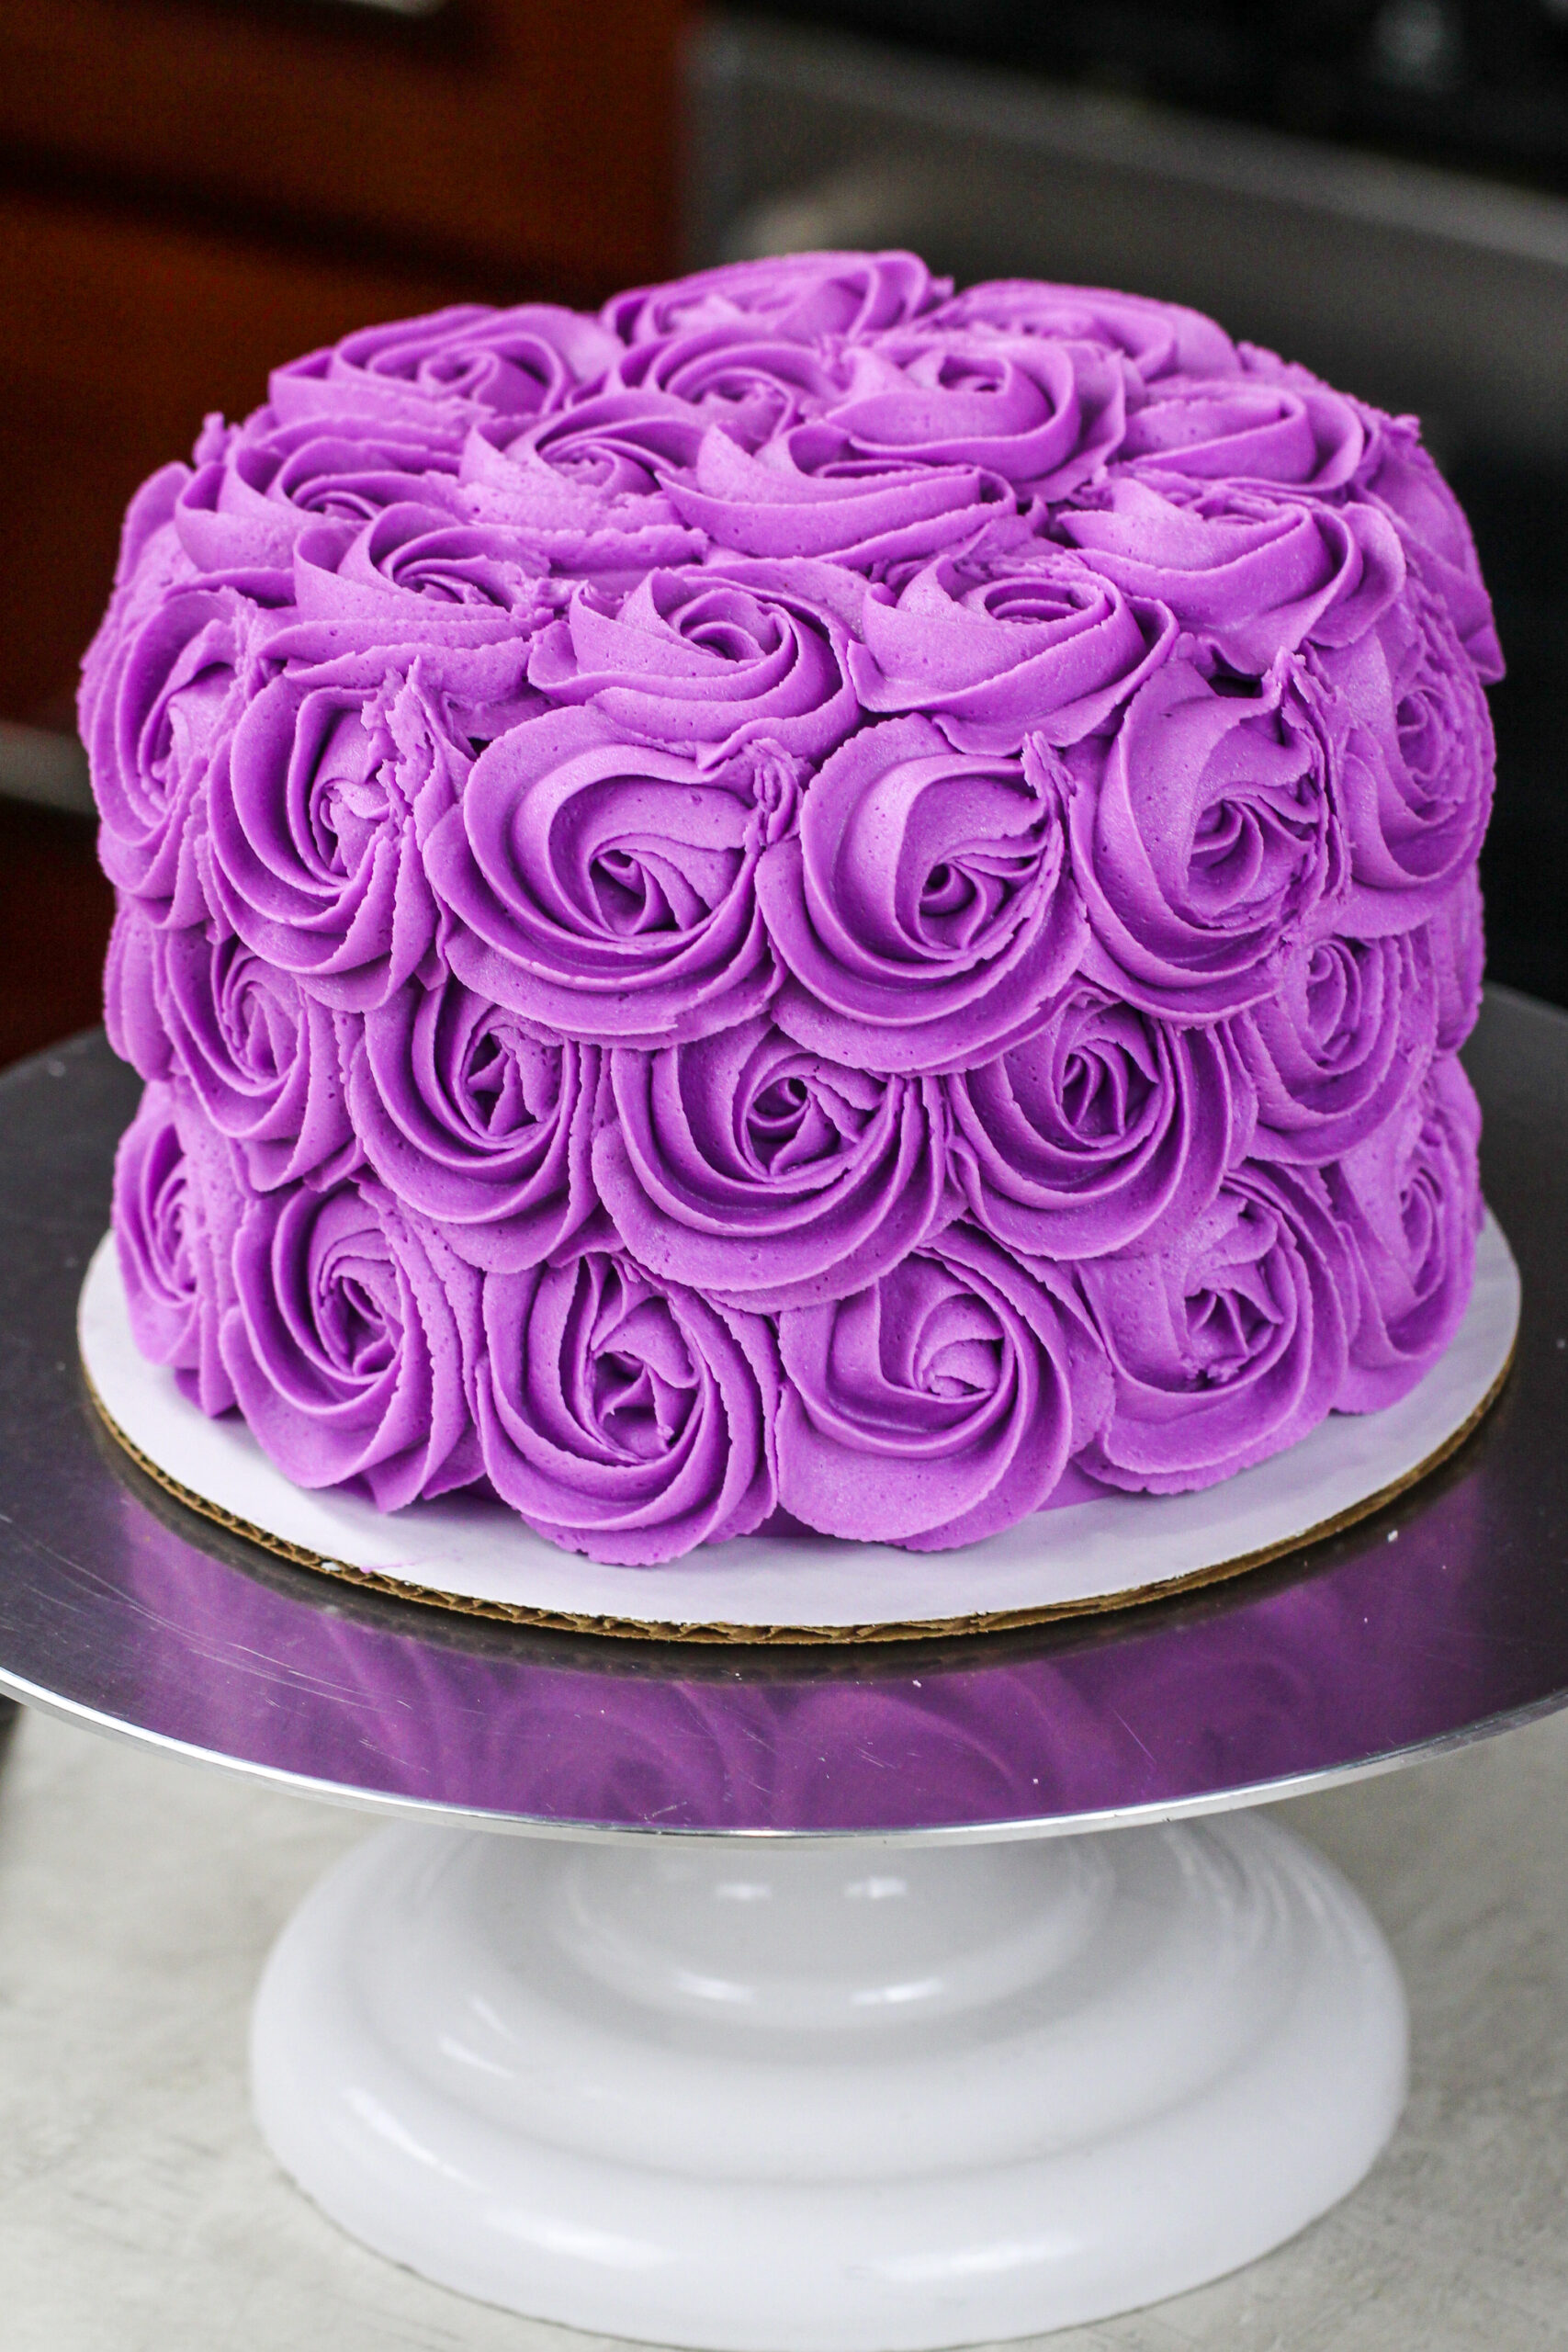 Rose Swirl Cake Tutorial - YouTube